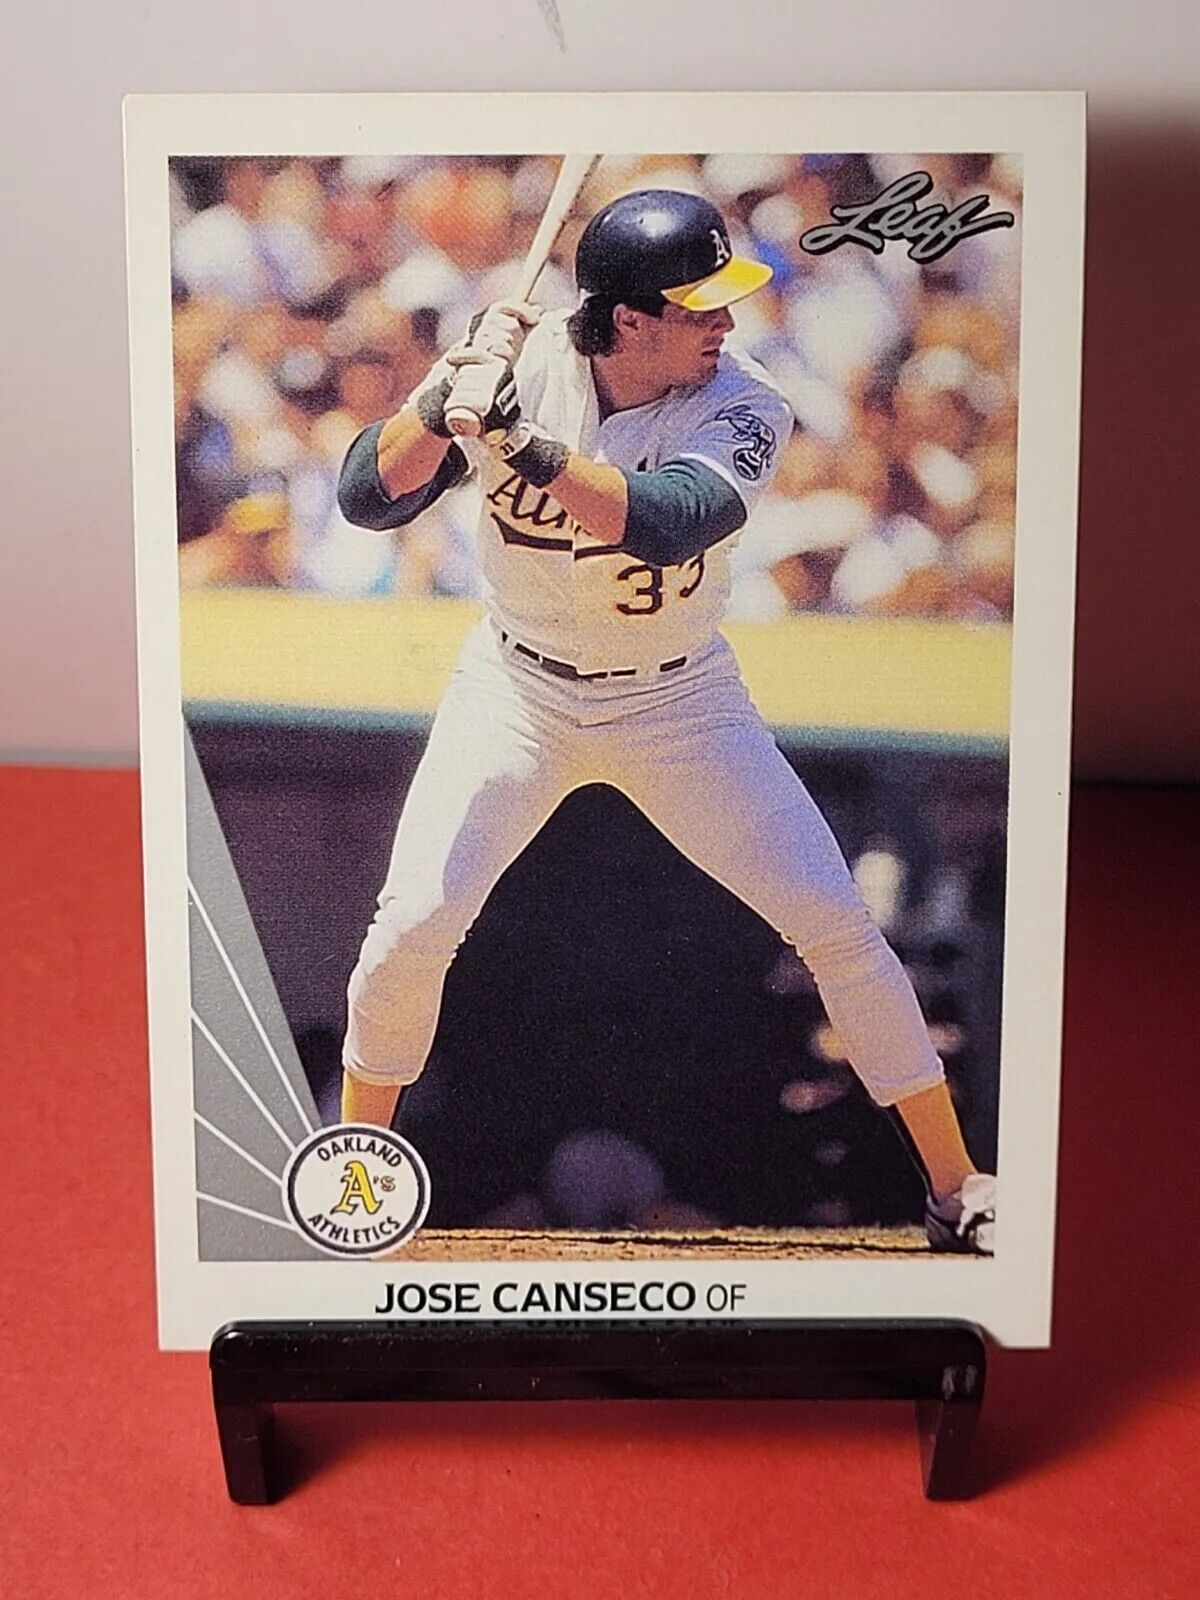 Jose Canseco #370 (1988 Topps) Baseball Card, Oakland Athletics